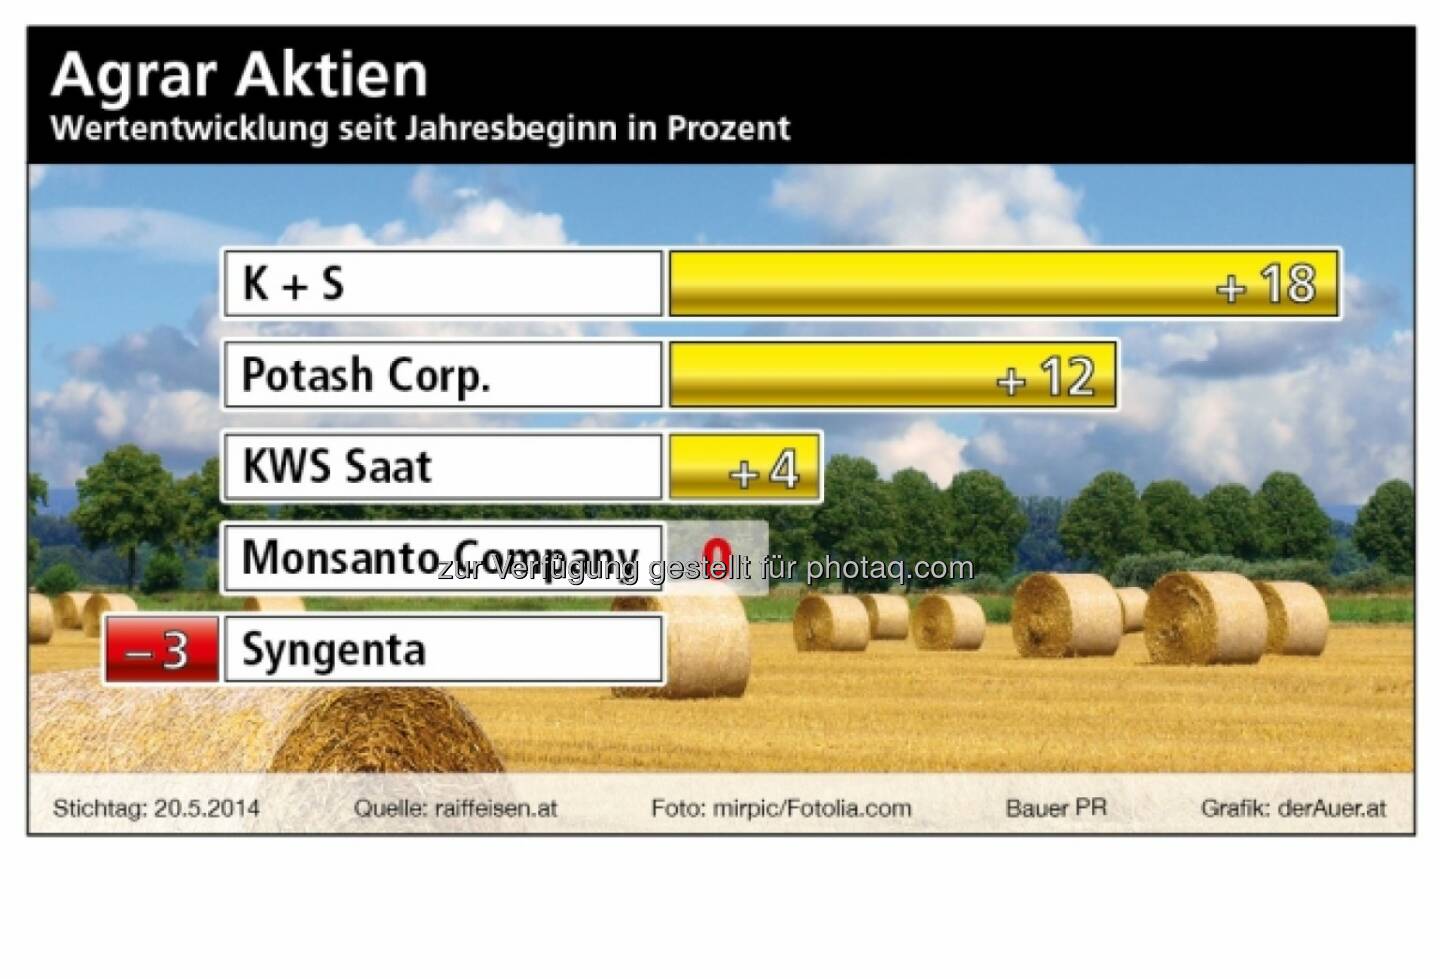 Agrar Aktien ytd 2014: K+S, Potash, KWS, Monsanto, Syngenta (derauer.at)